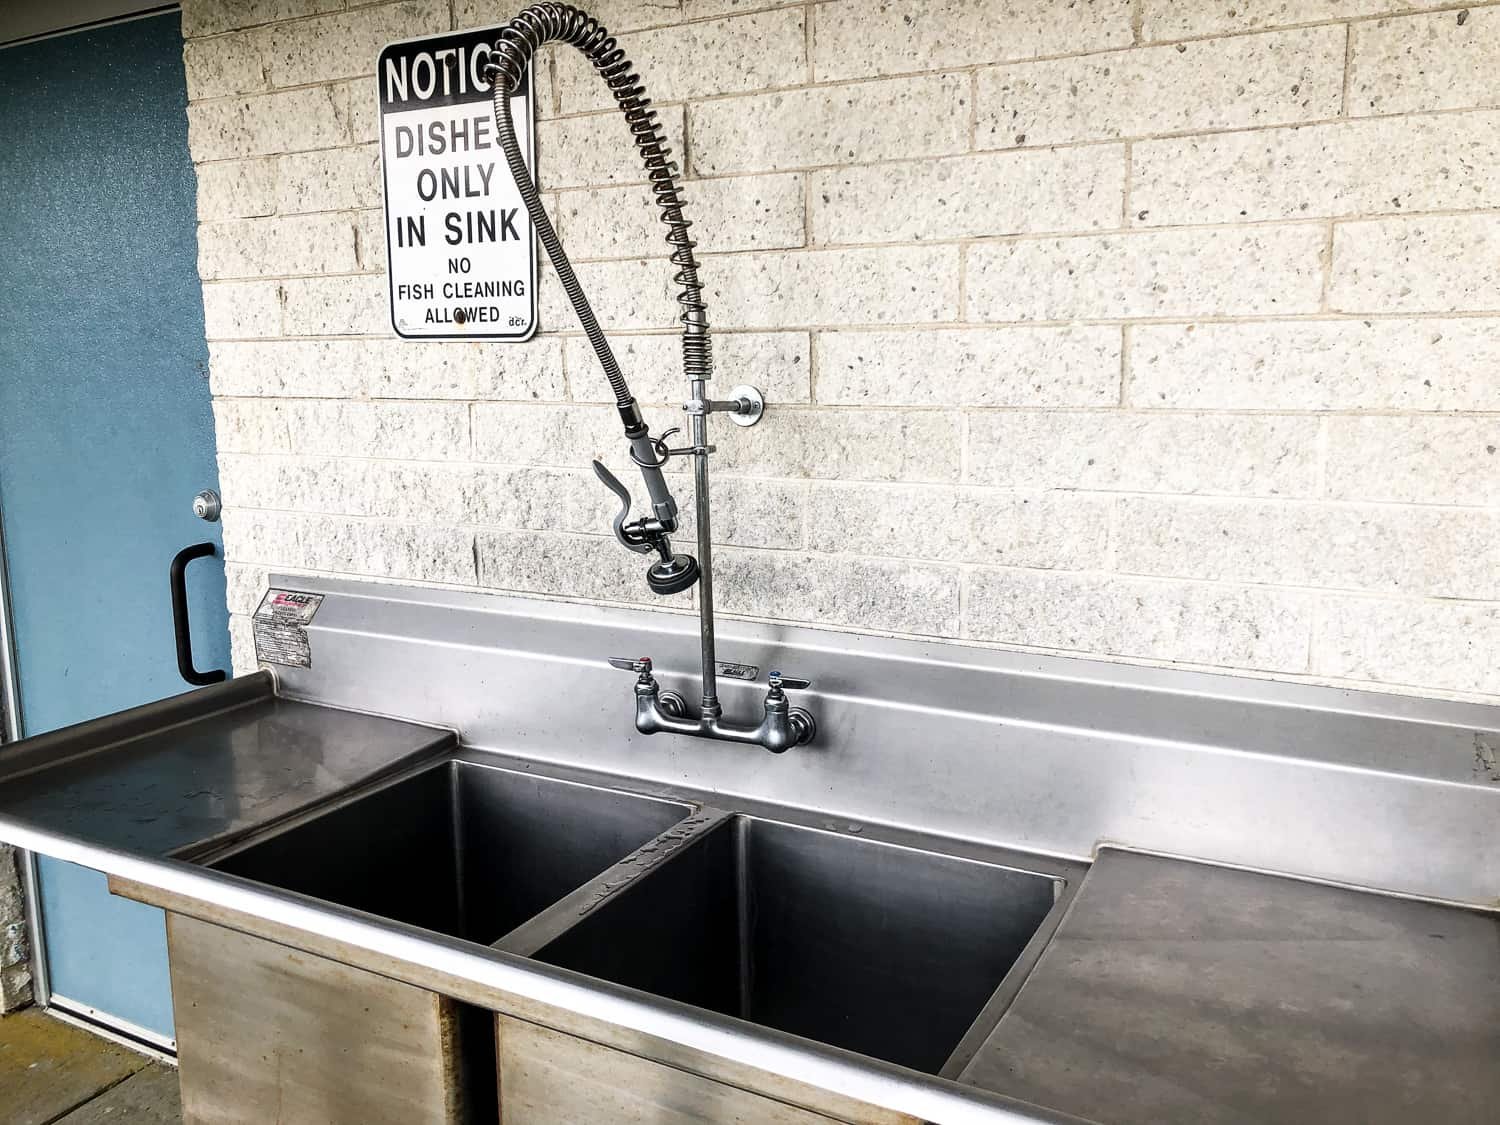 Dishwashing station at Scusset Beach State Reservation